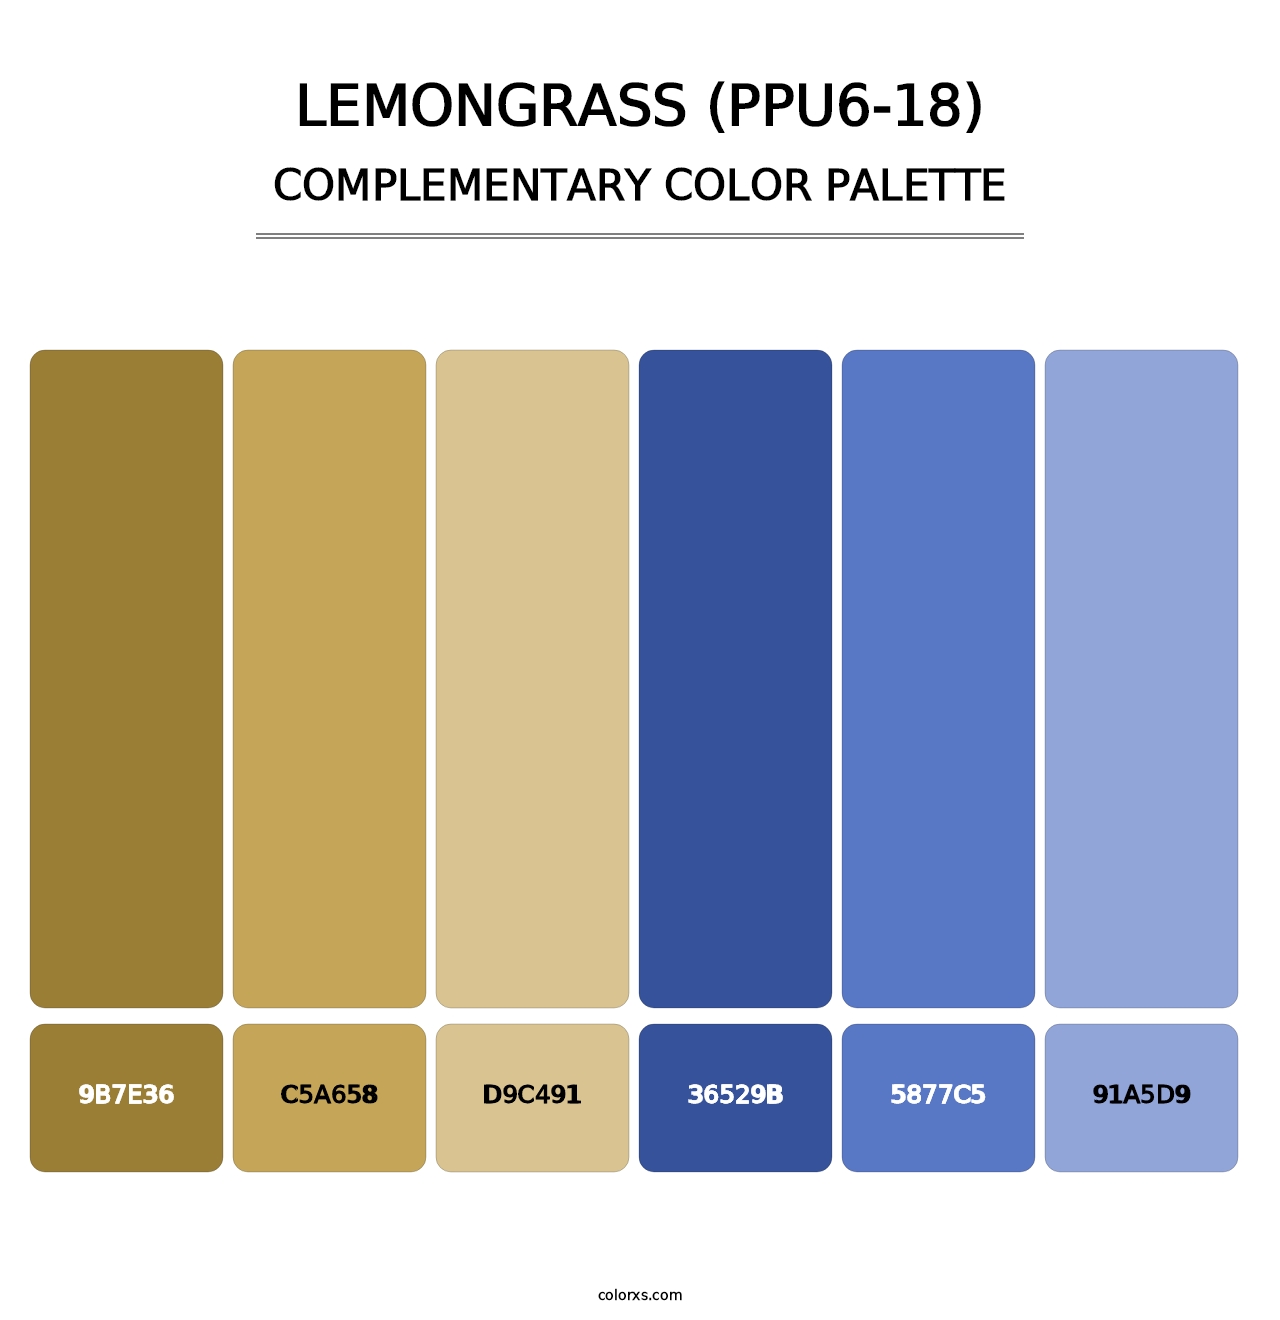 Lemongrass (PPU6-18) - Complementary Color Palette